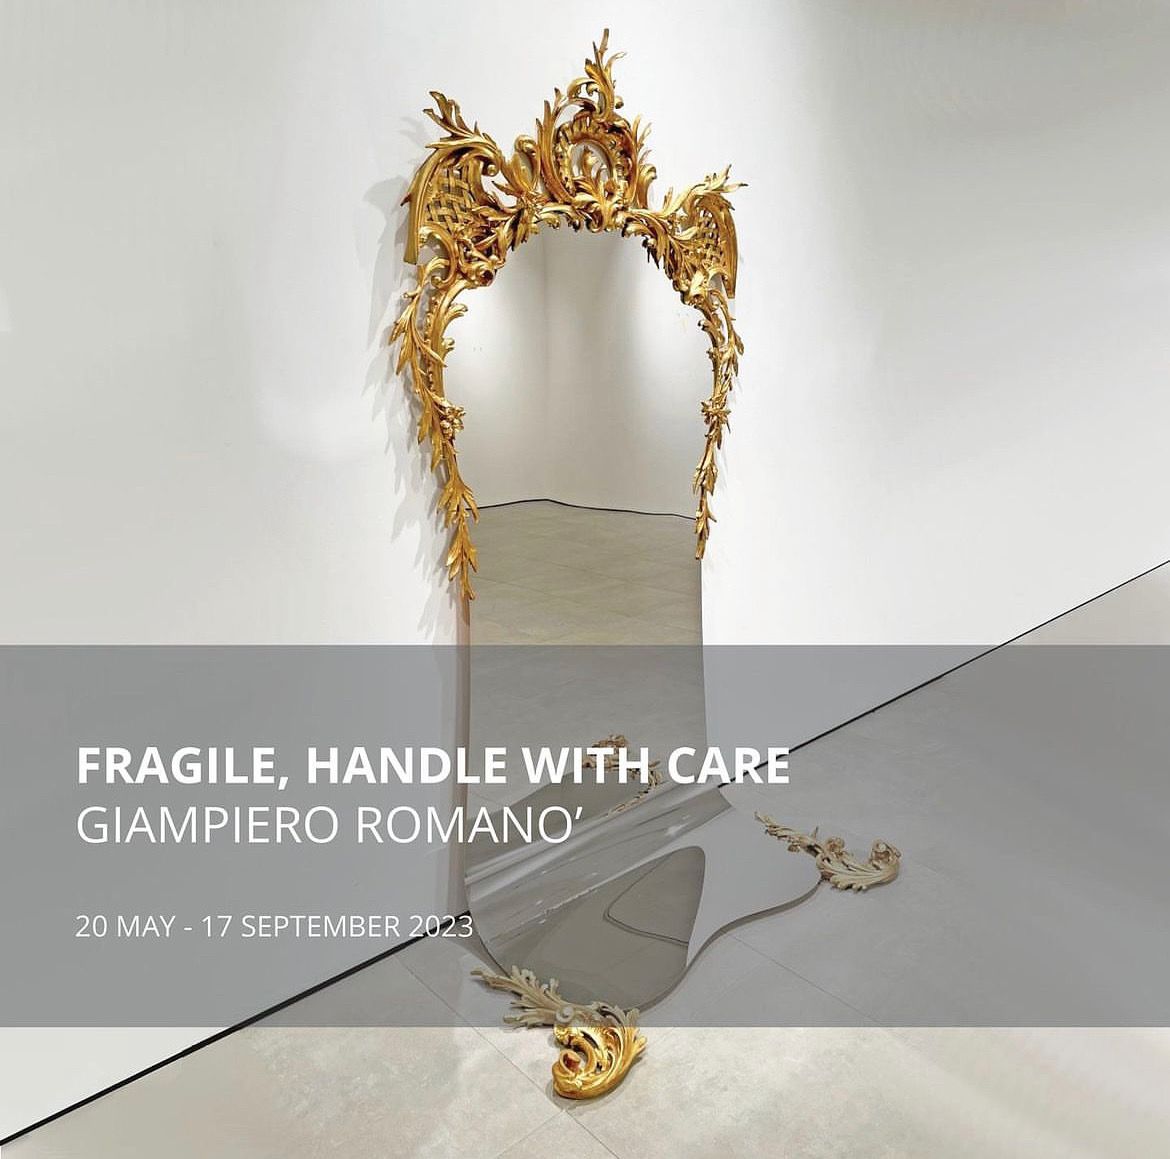 Fragile, handle with care | Giampiero Romanò